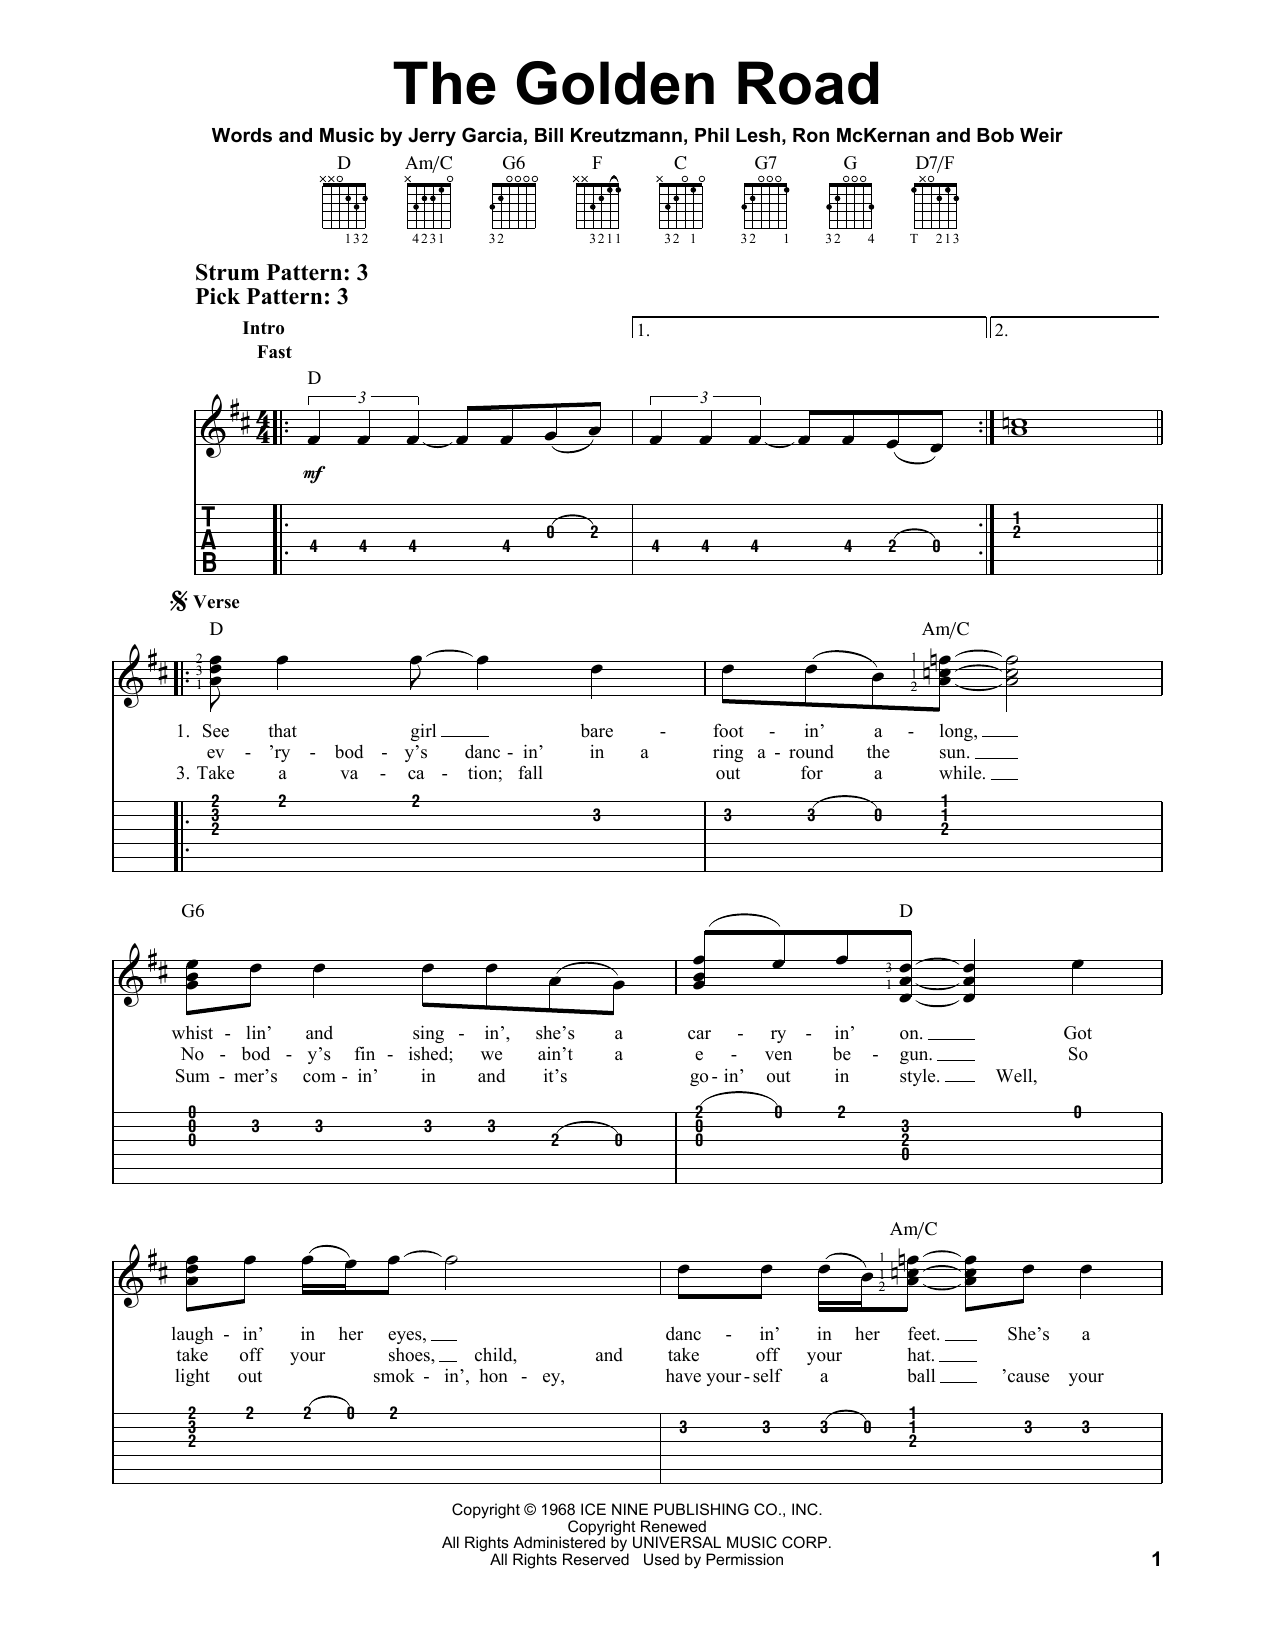 Grateful Dead The Golden Road Sheet Music Notes & Chords for Lyrics & Chords - Download or Print PDF